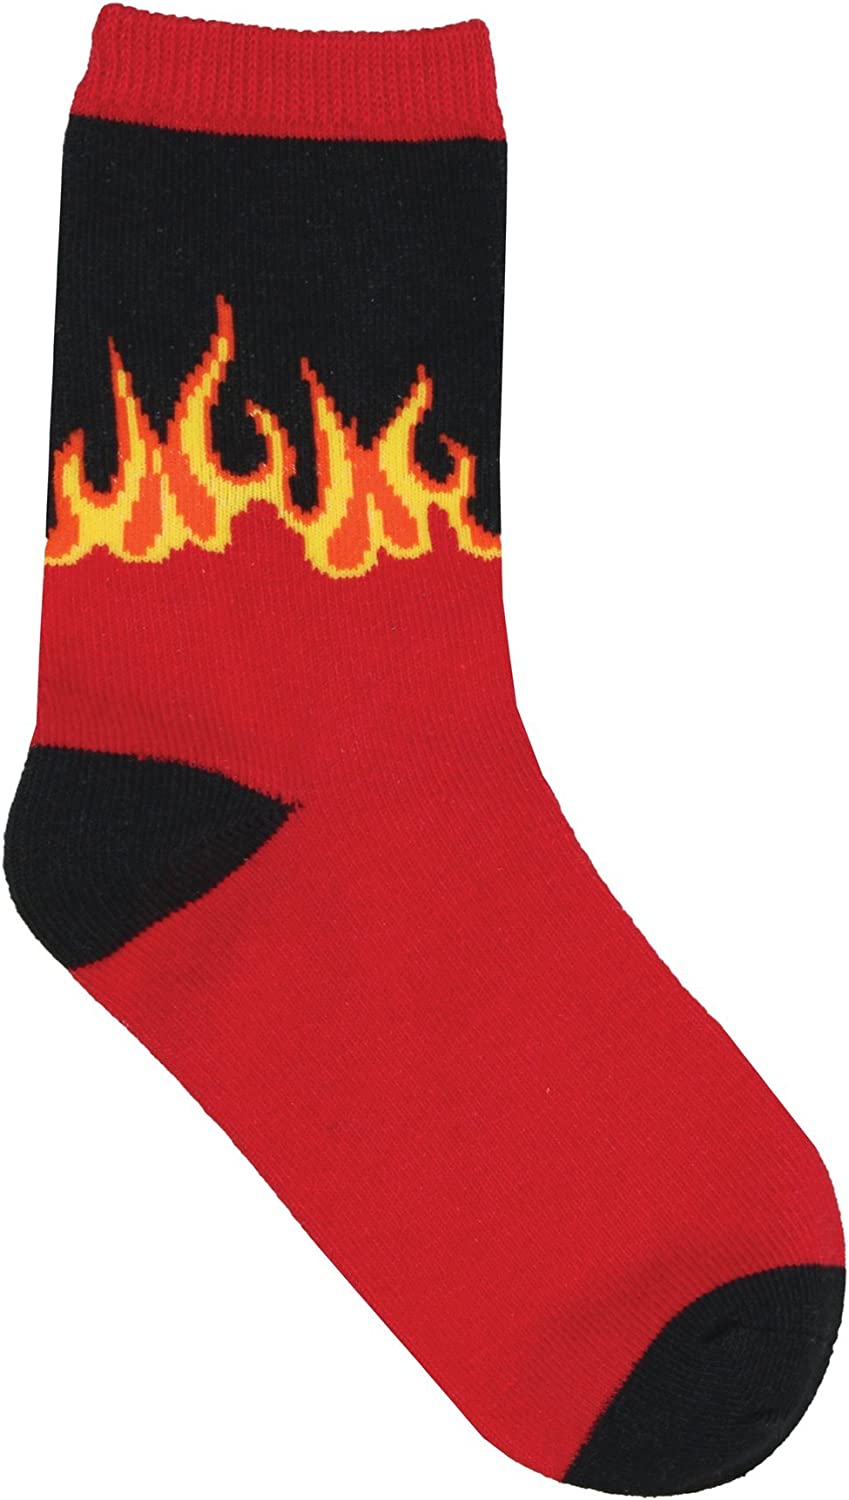 Fired Up Kids Socks, 12-24 Month